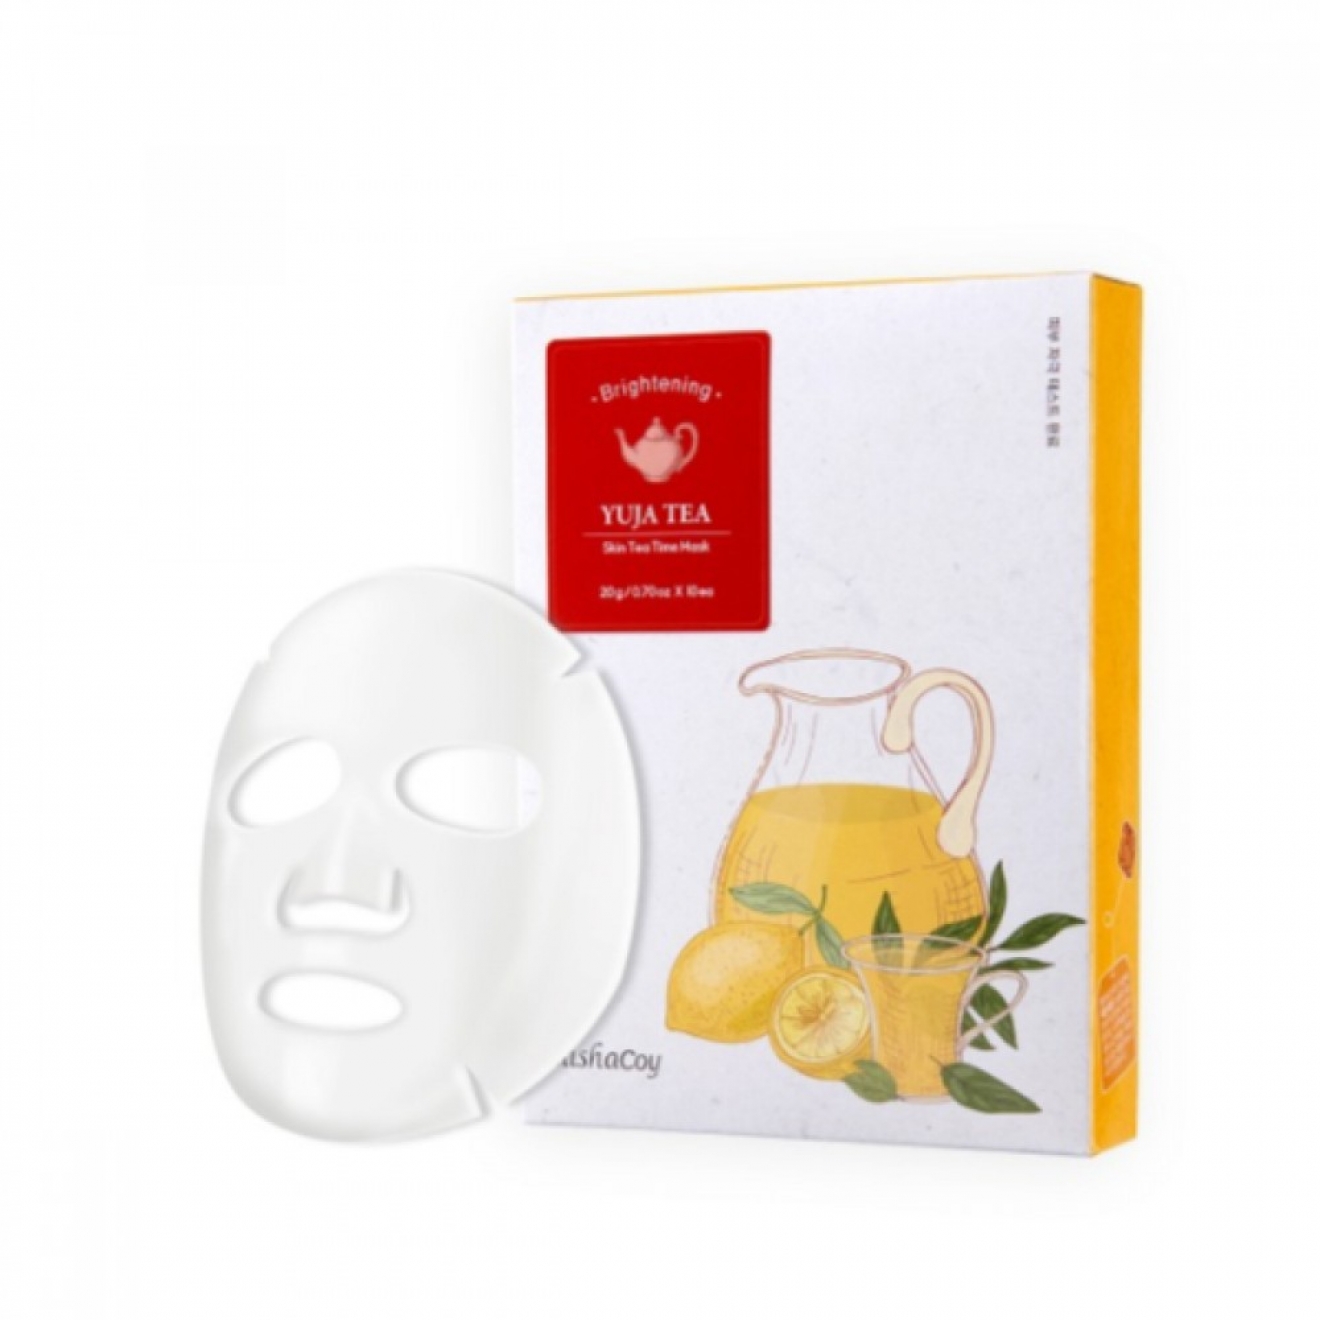 Elishacoy, Brightening Yuja Tea Skin Tea Time Mask ,20gr